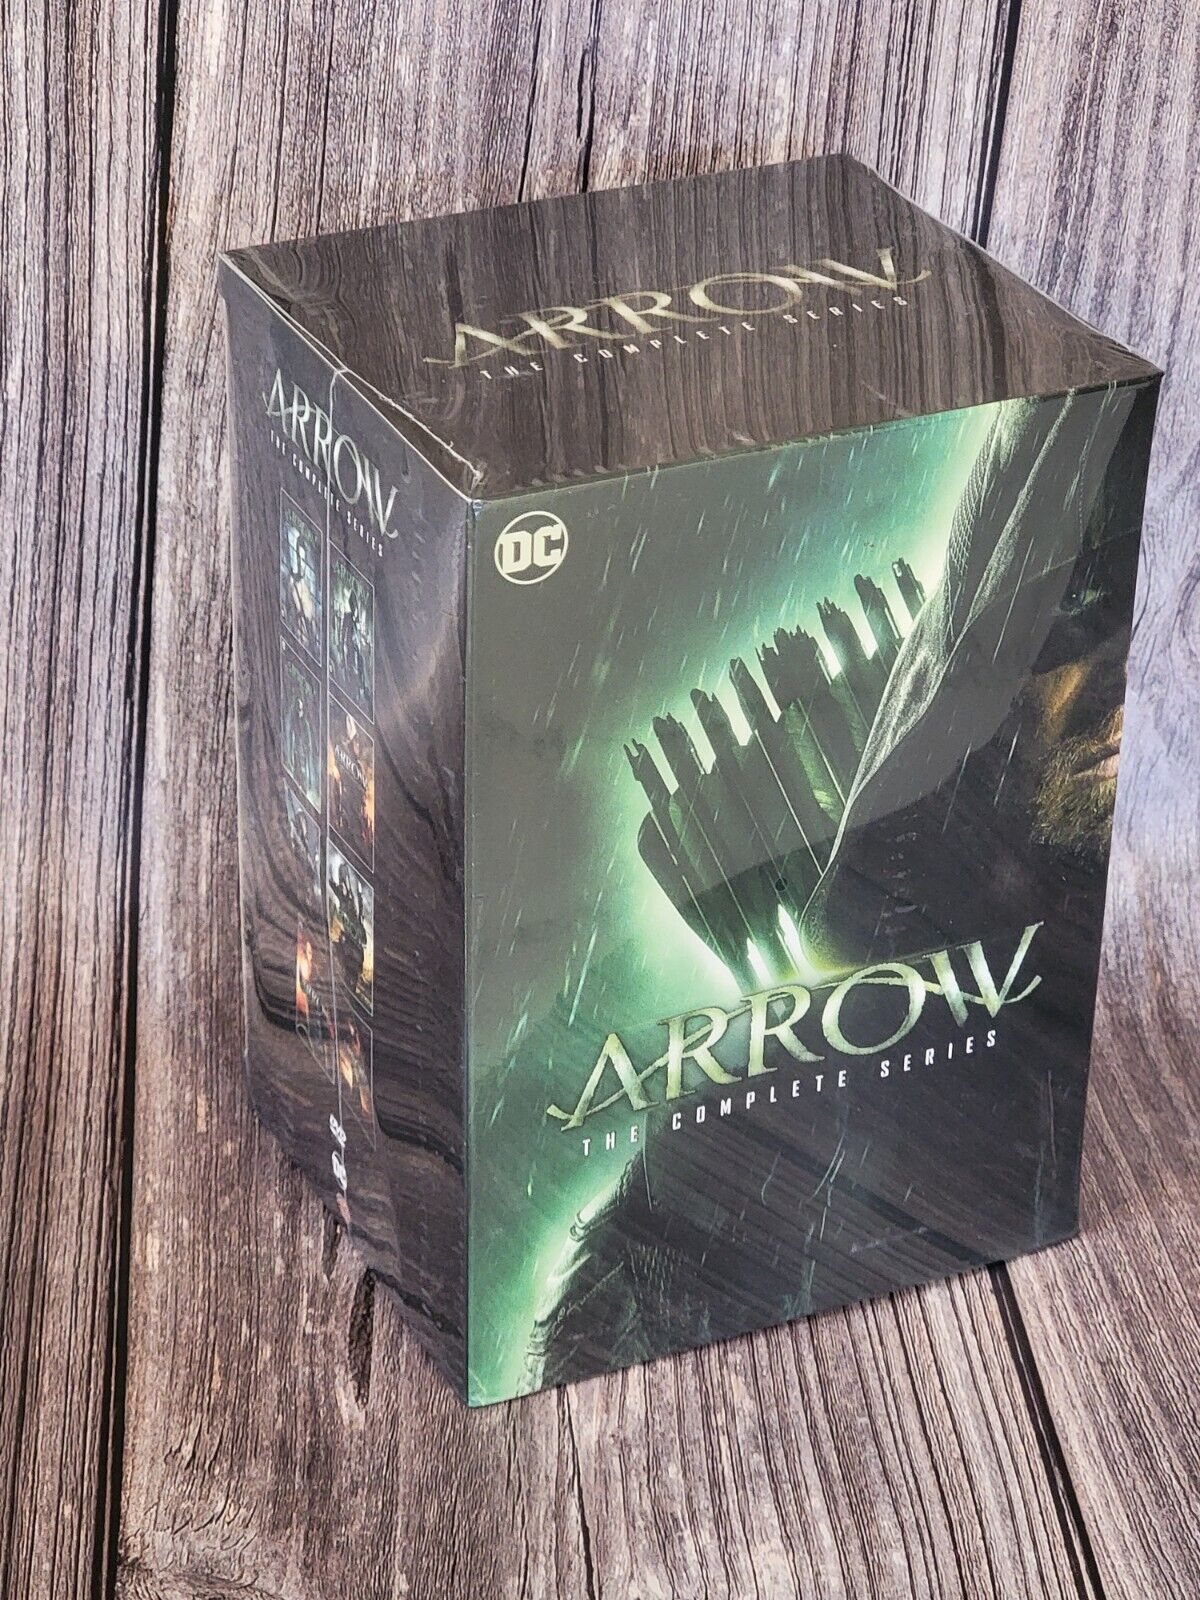 Arrow: The Complete Series - Seasons 1-8 (DVD Box Set) Brand New & Sealed USA